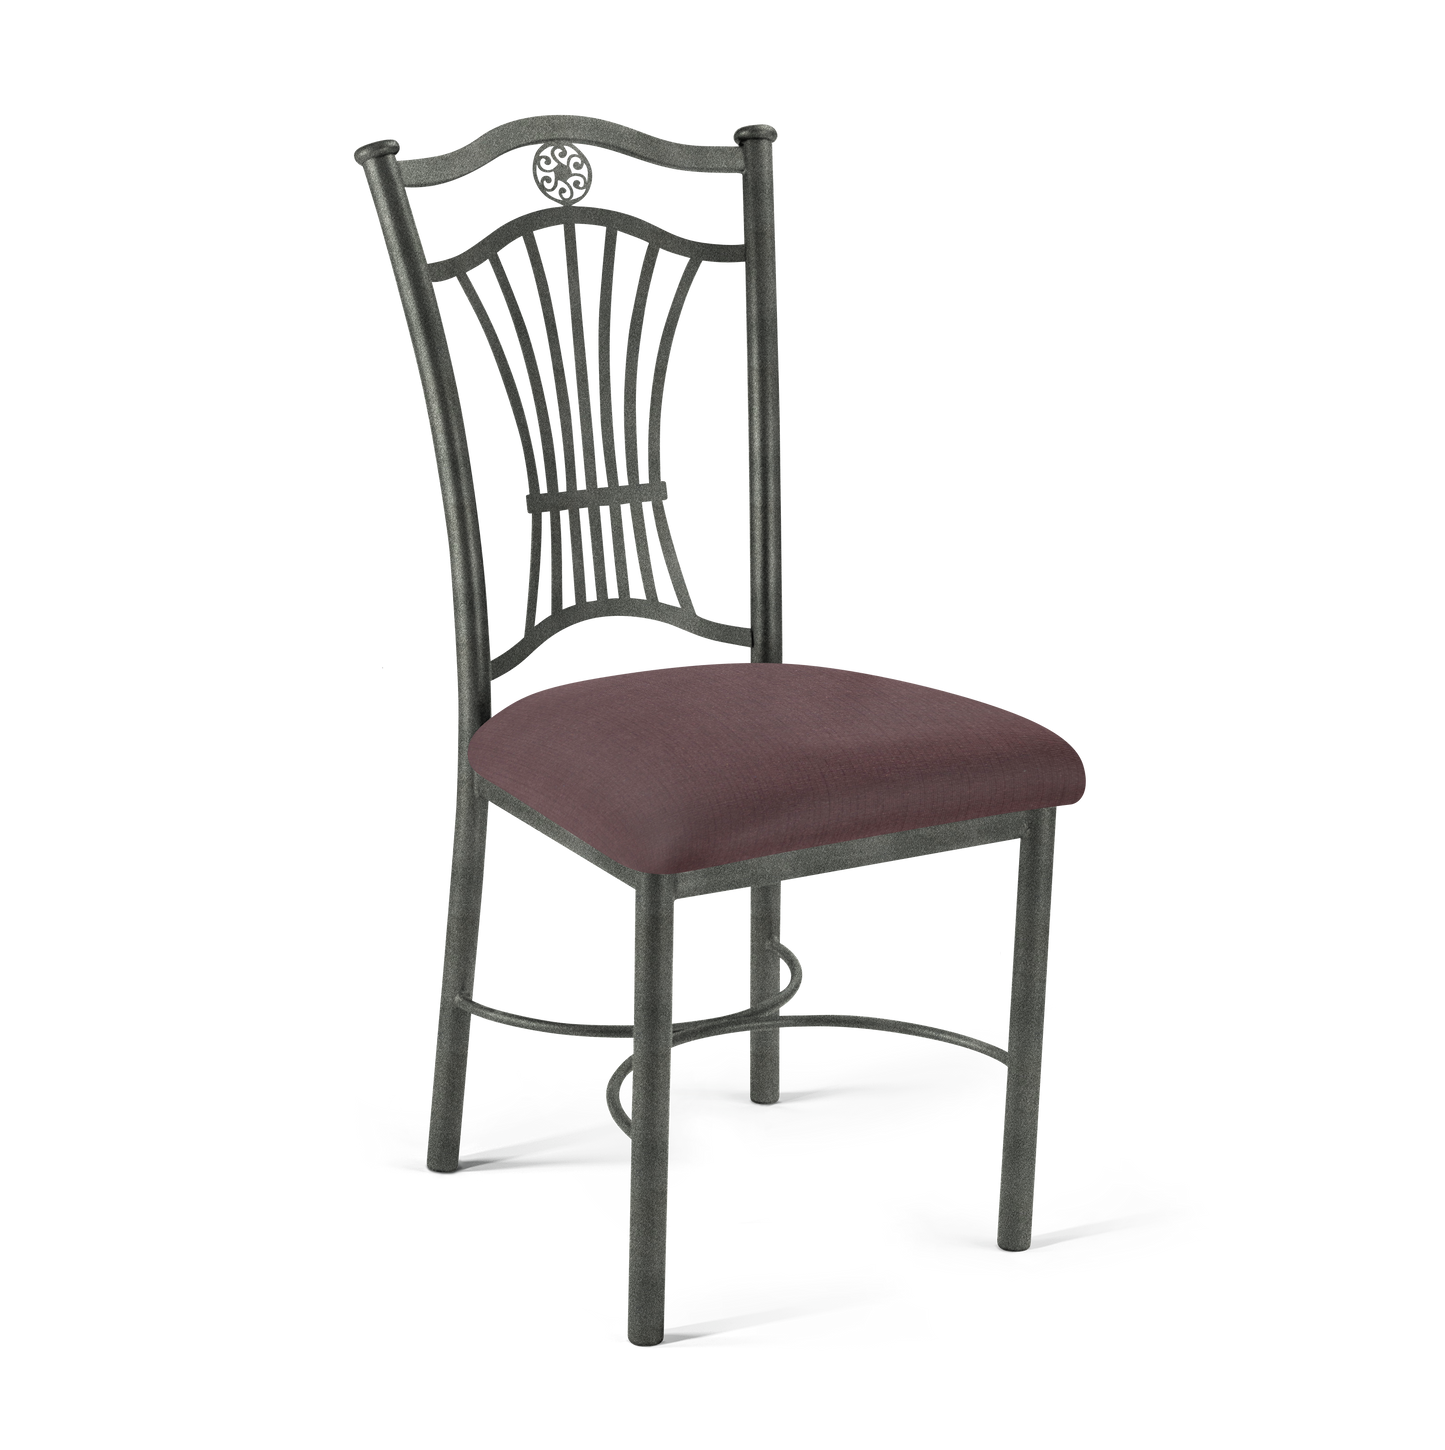 Trim Fit Chair - 425